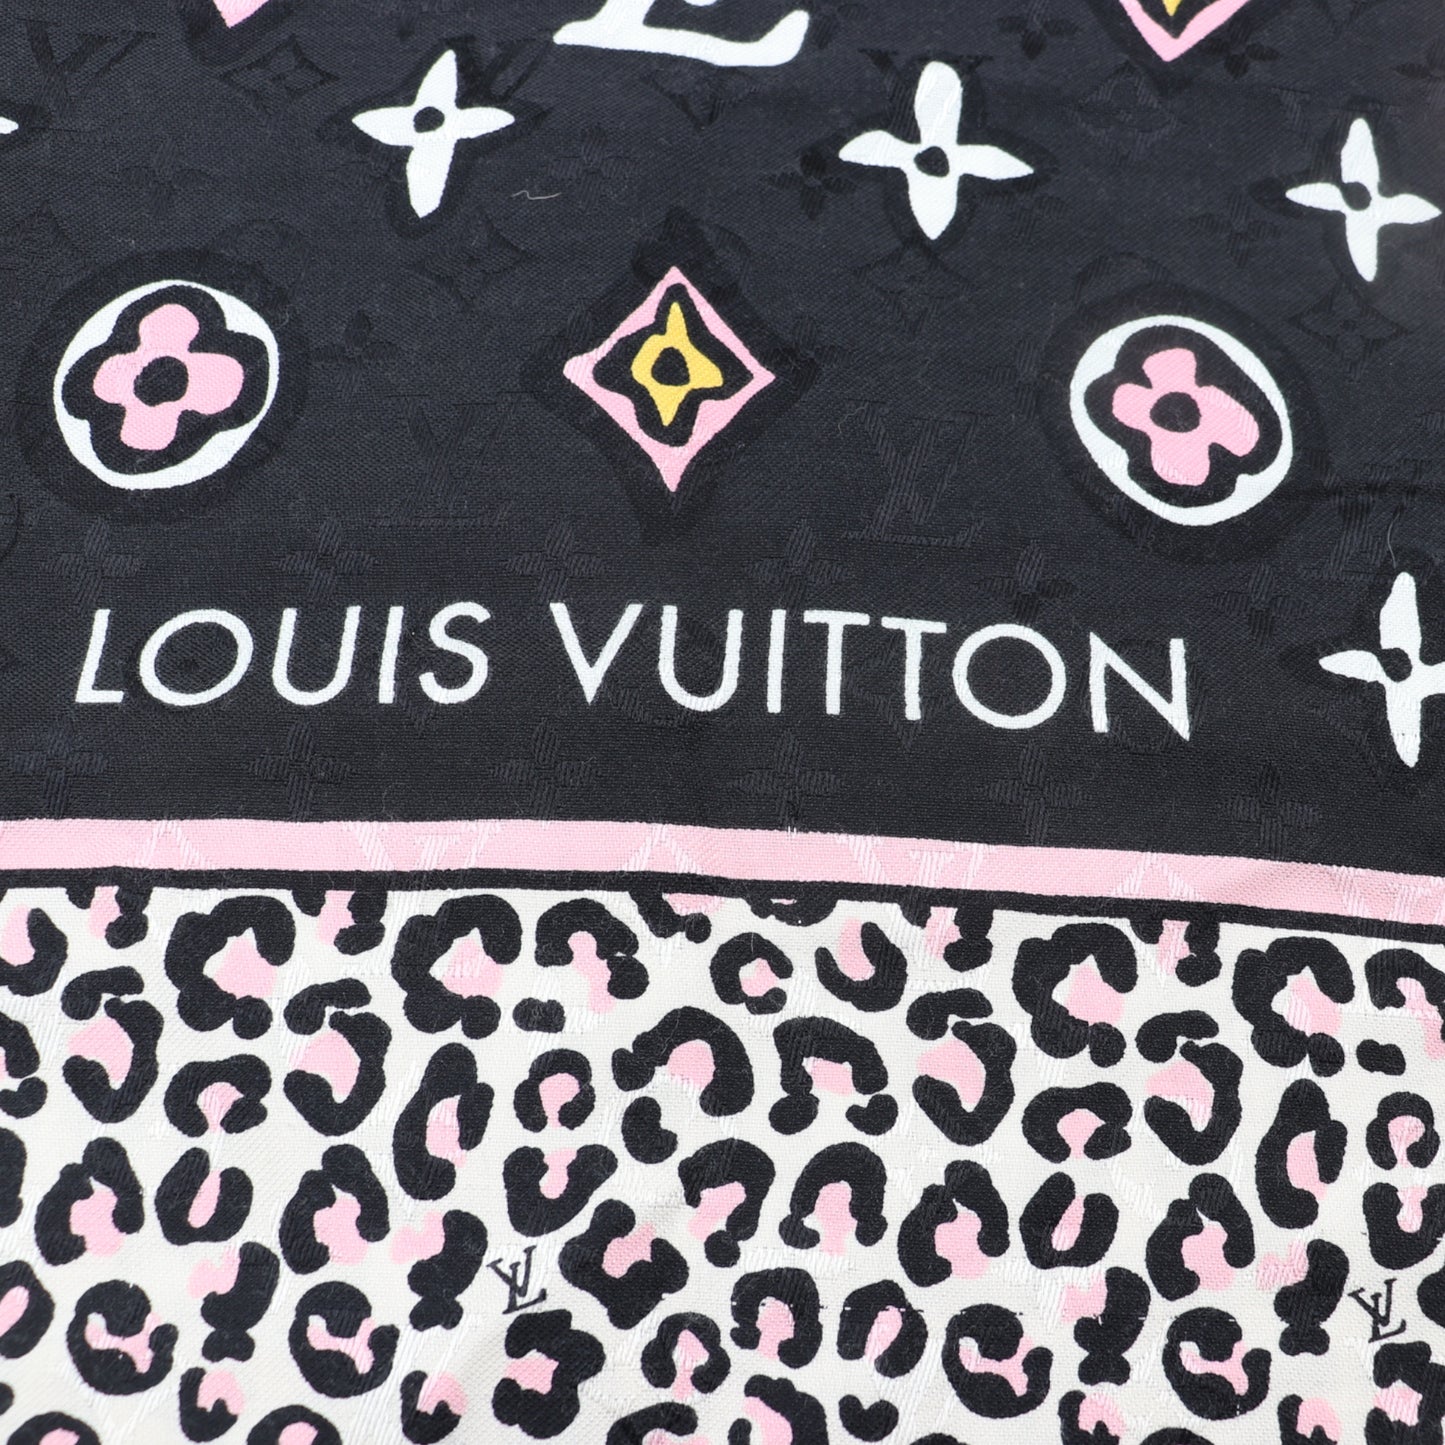 Louis Vuitton “Wild at heart” Schal